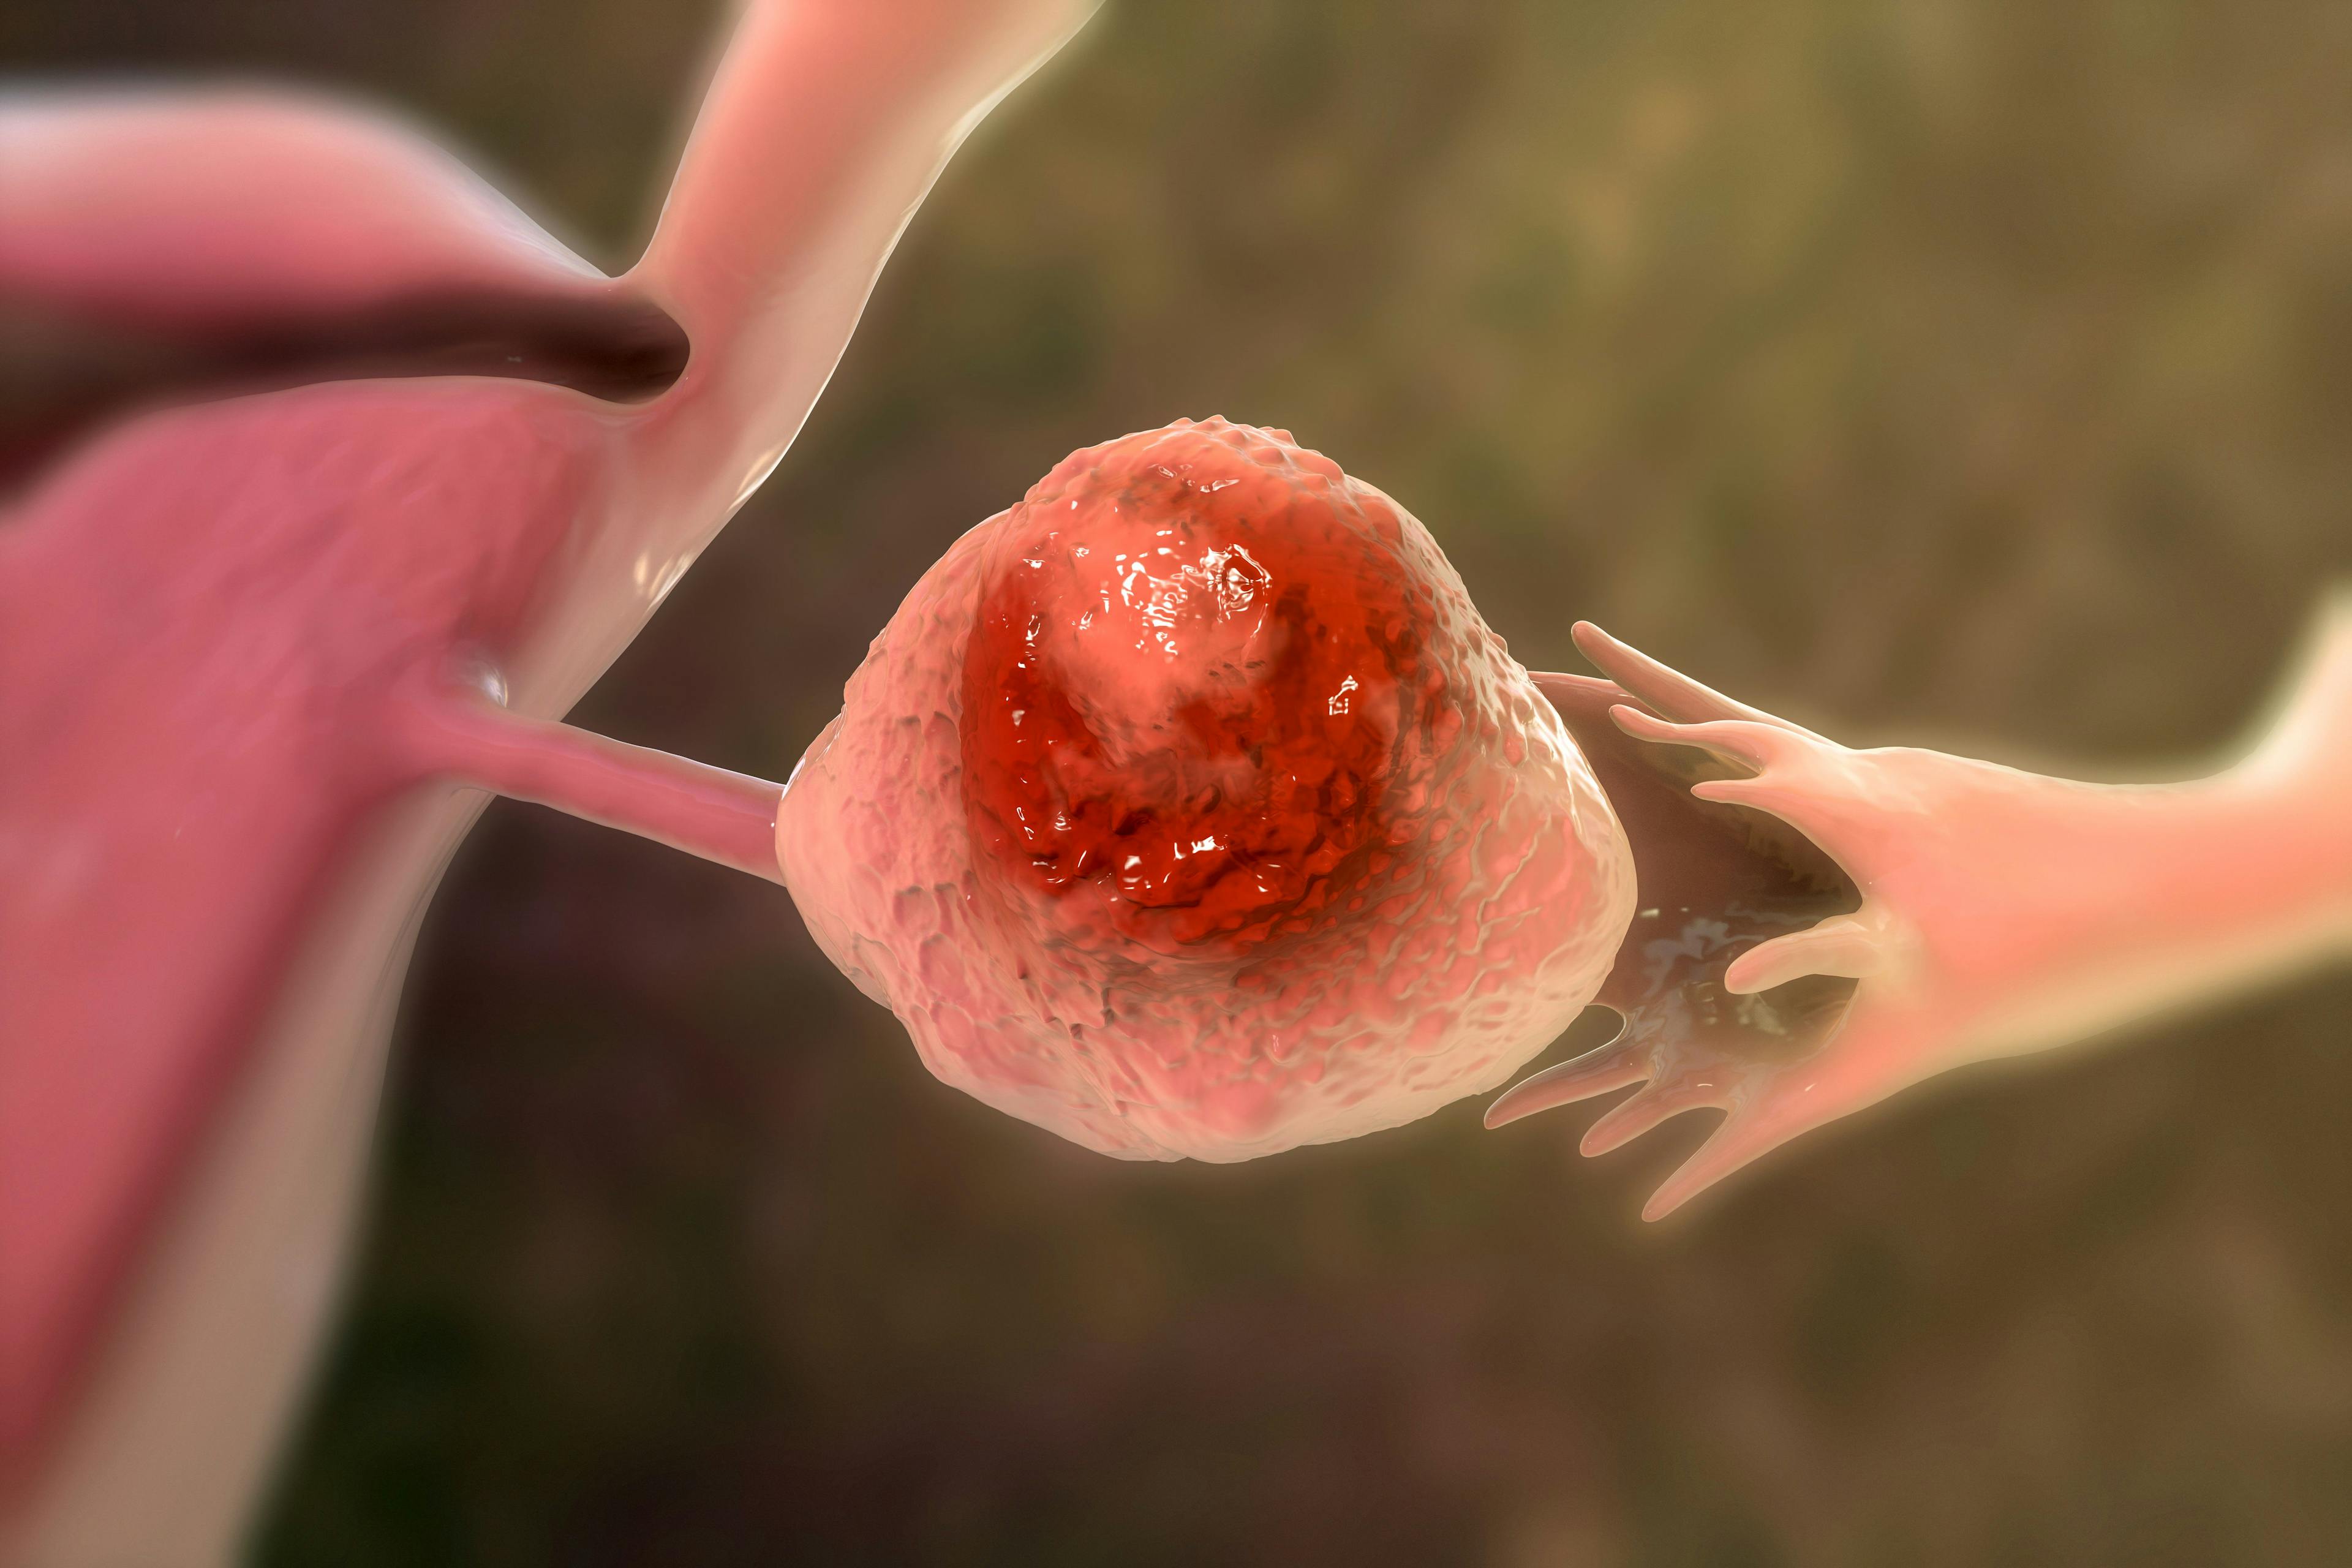 Illustration of ovarian caner: ©Dr_Microbe - stock.adobe.com